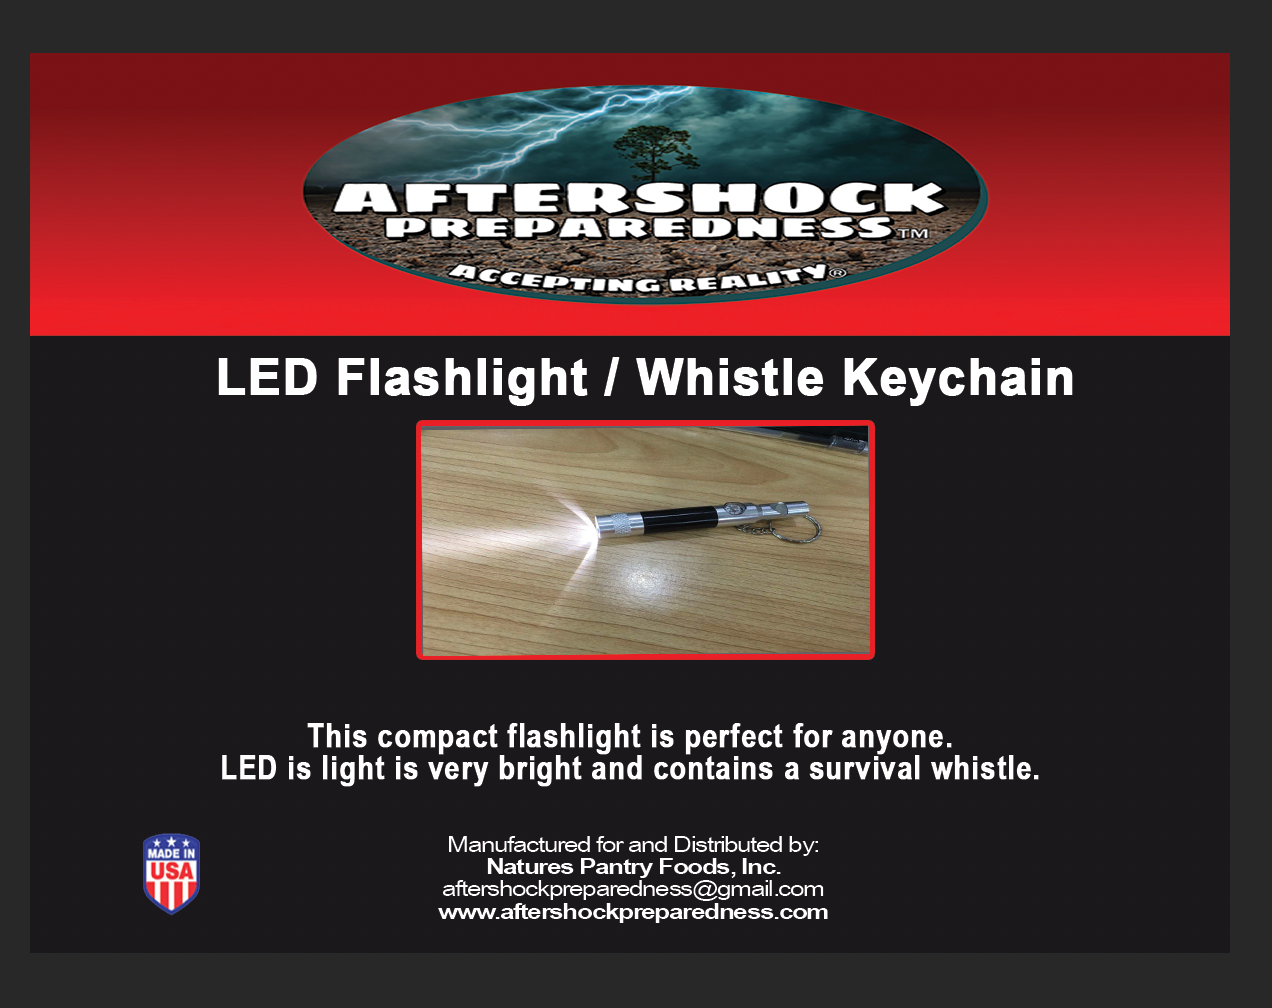 LED Flashlight/Whistle Key Chaim by